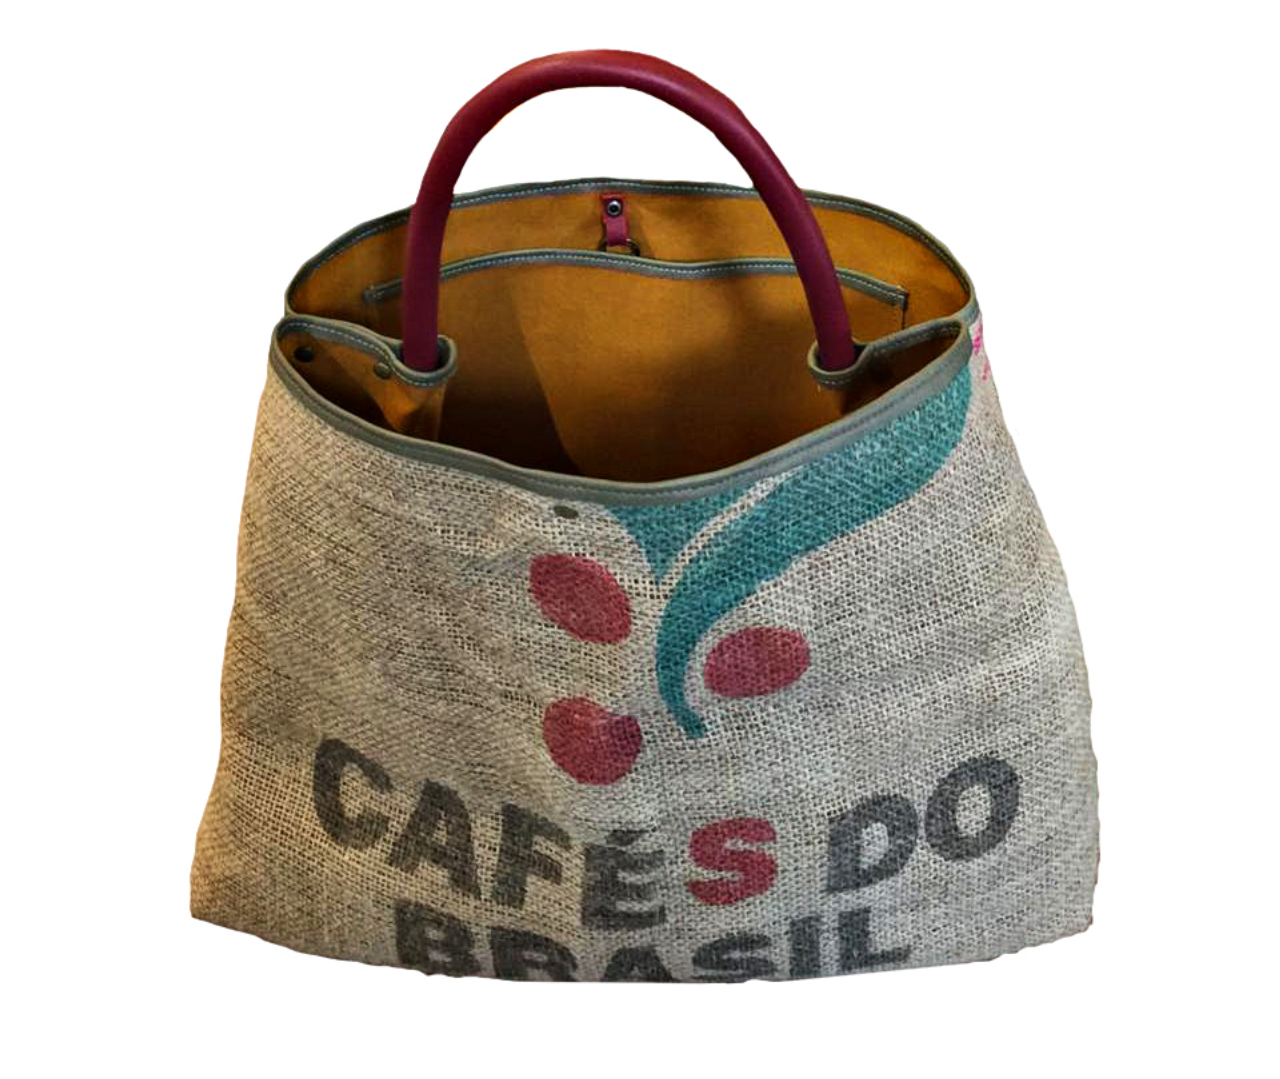 Bolsa assinada por Saulo Cesar, para MARROC,<br>marca autoral de upcycle de resíduos. Feita em<br>lona, saca de café e resíduos de couro, por 599.<br>@saulocesardesigns.